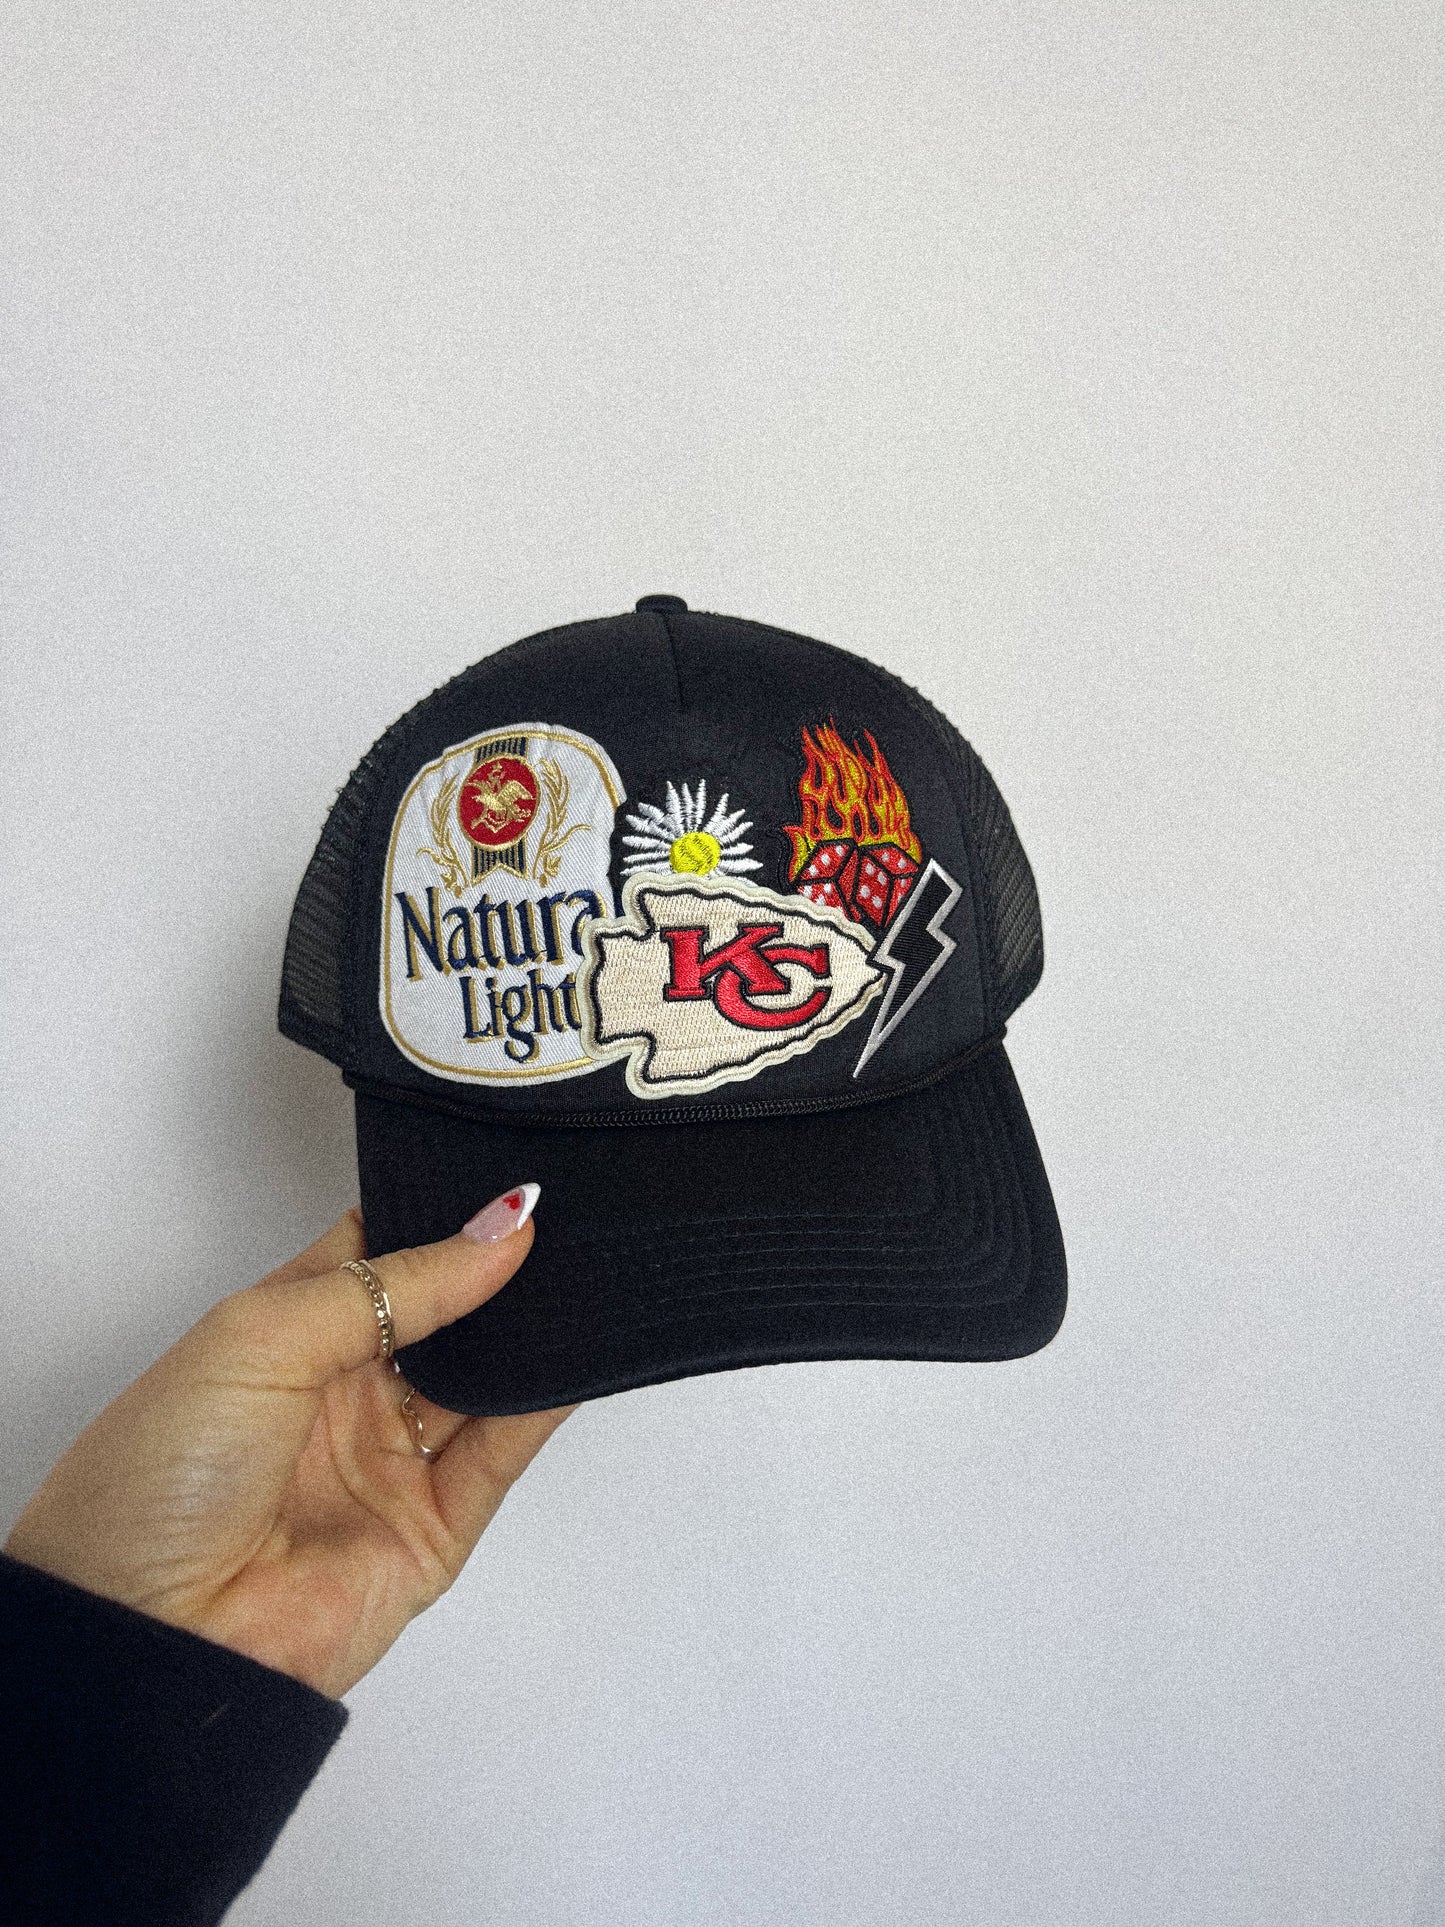 kc natty light trucker hat - black